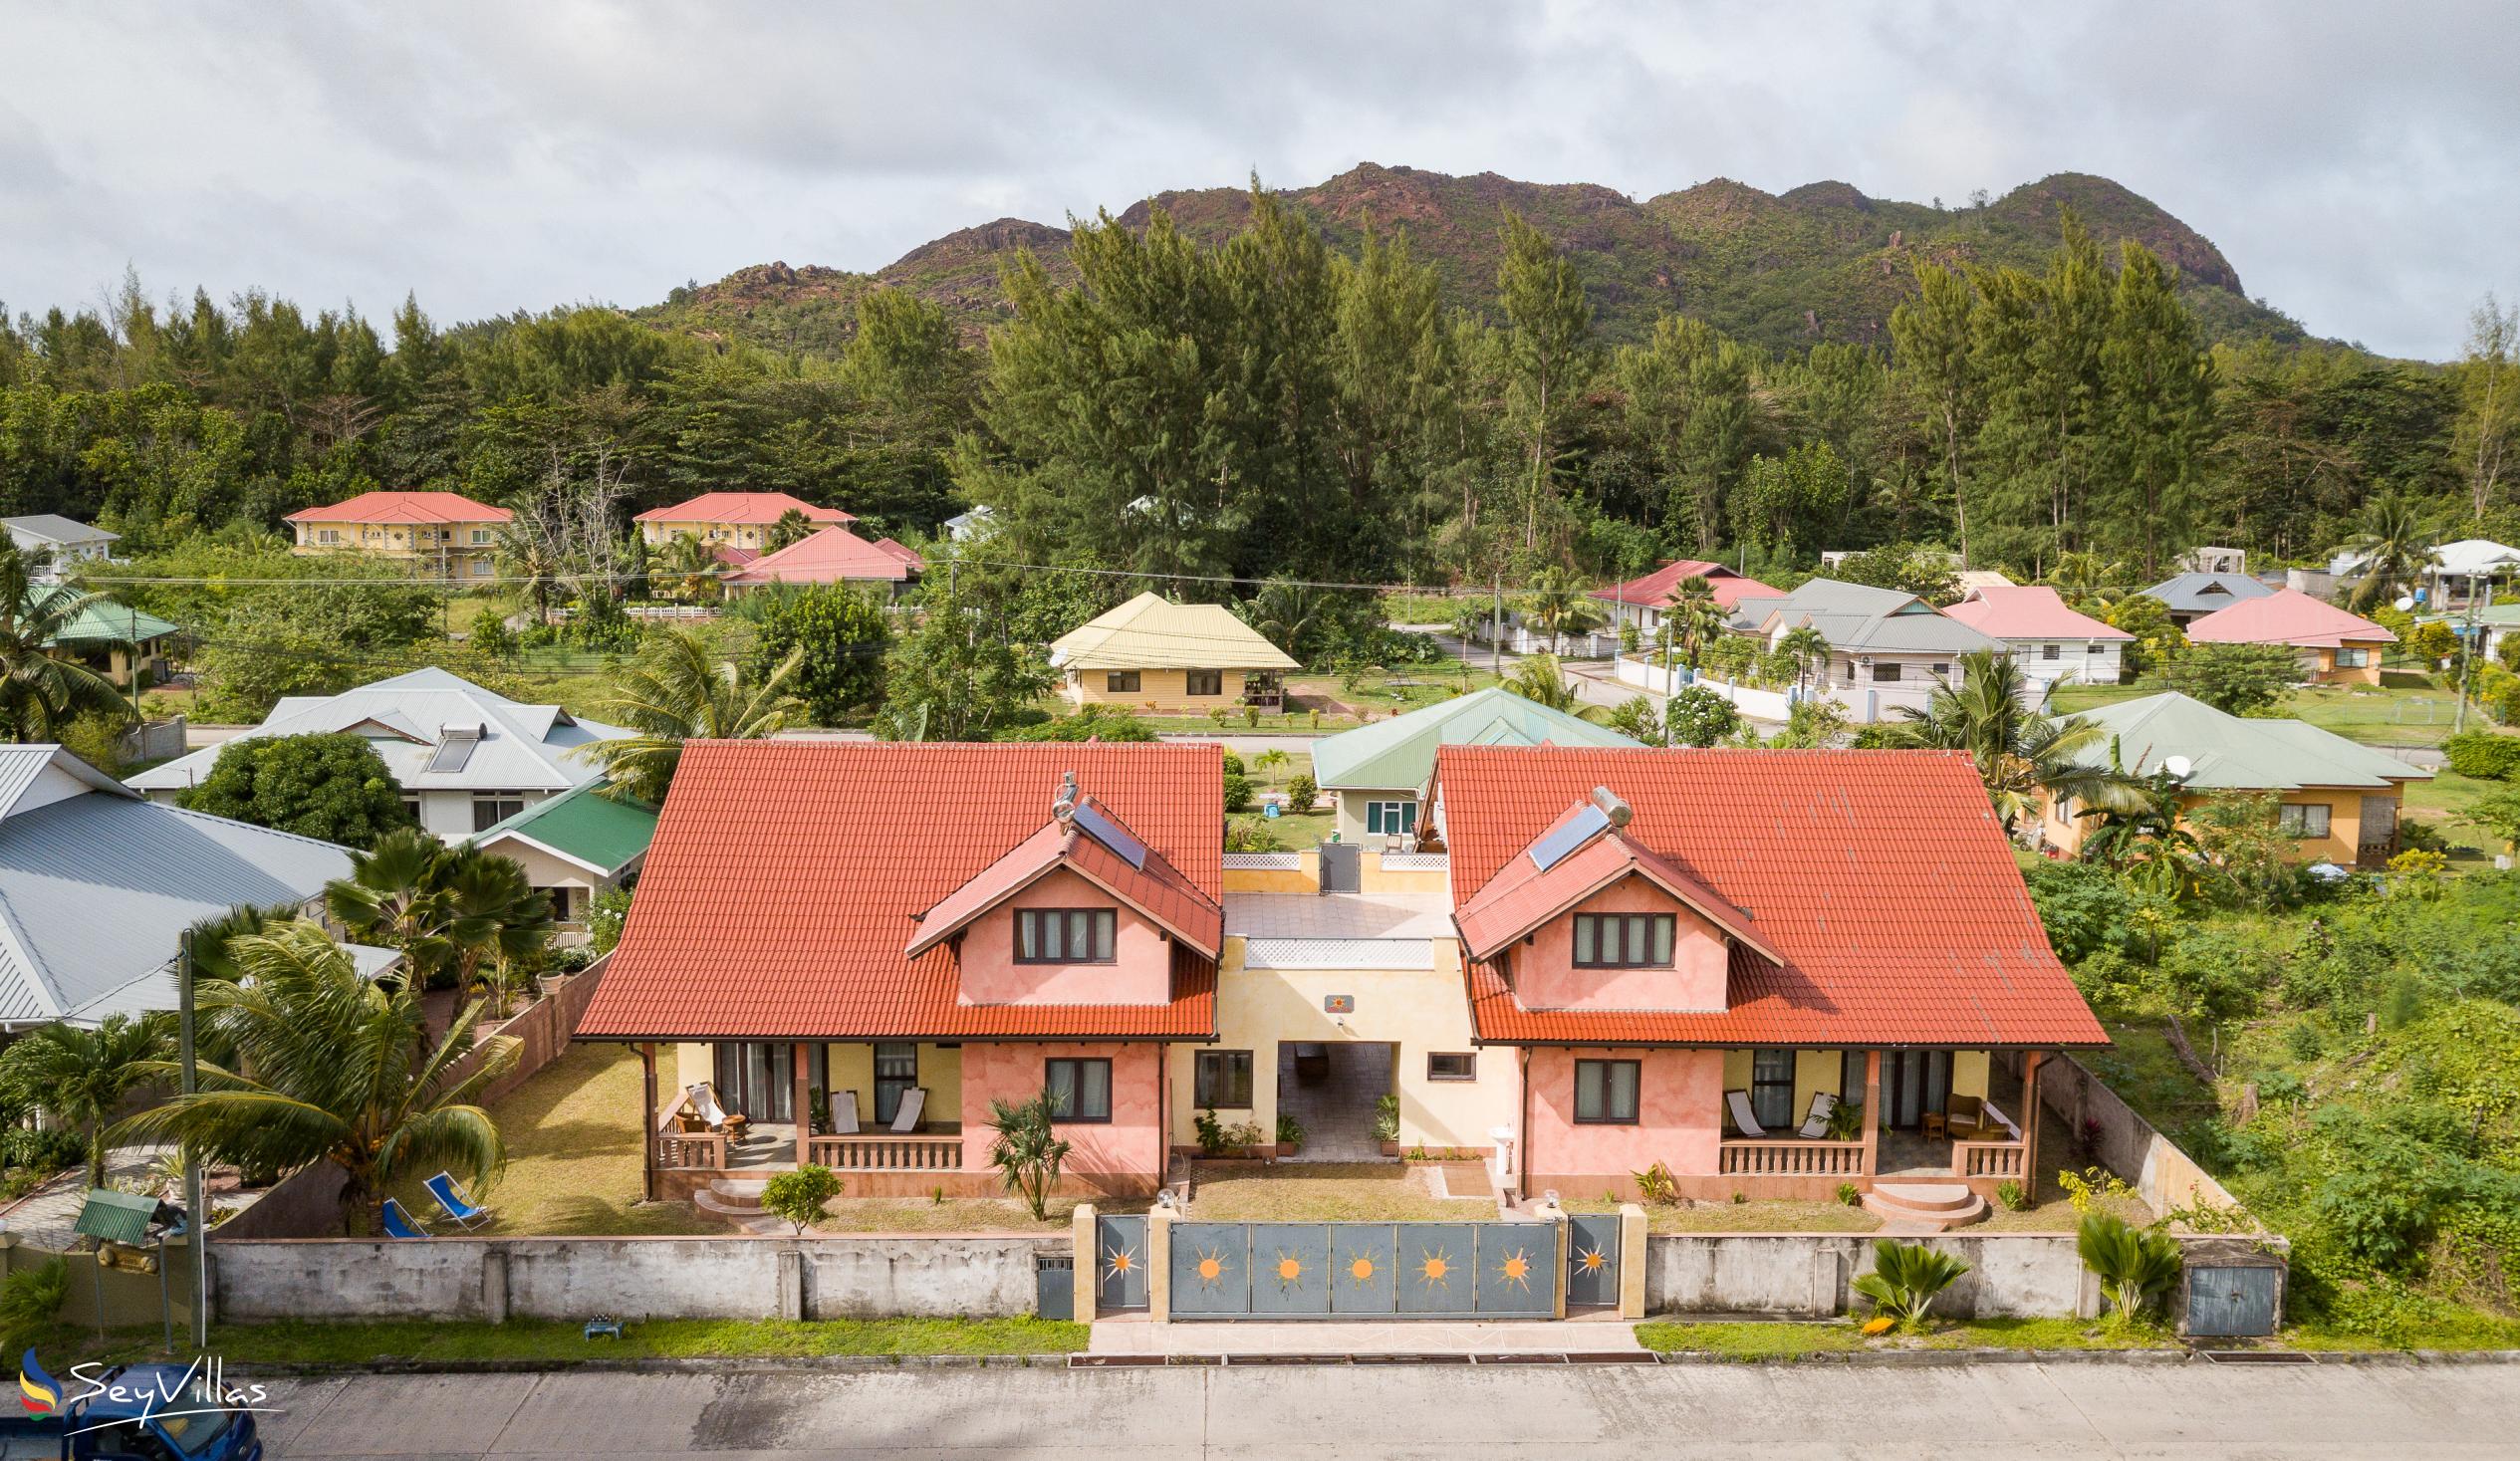 Photo 2: Villa Sole - Outdoor area - Praslin (Seychelles)